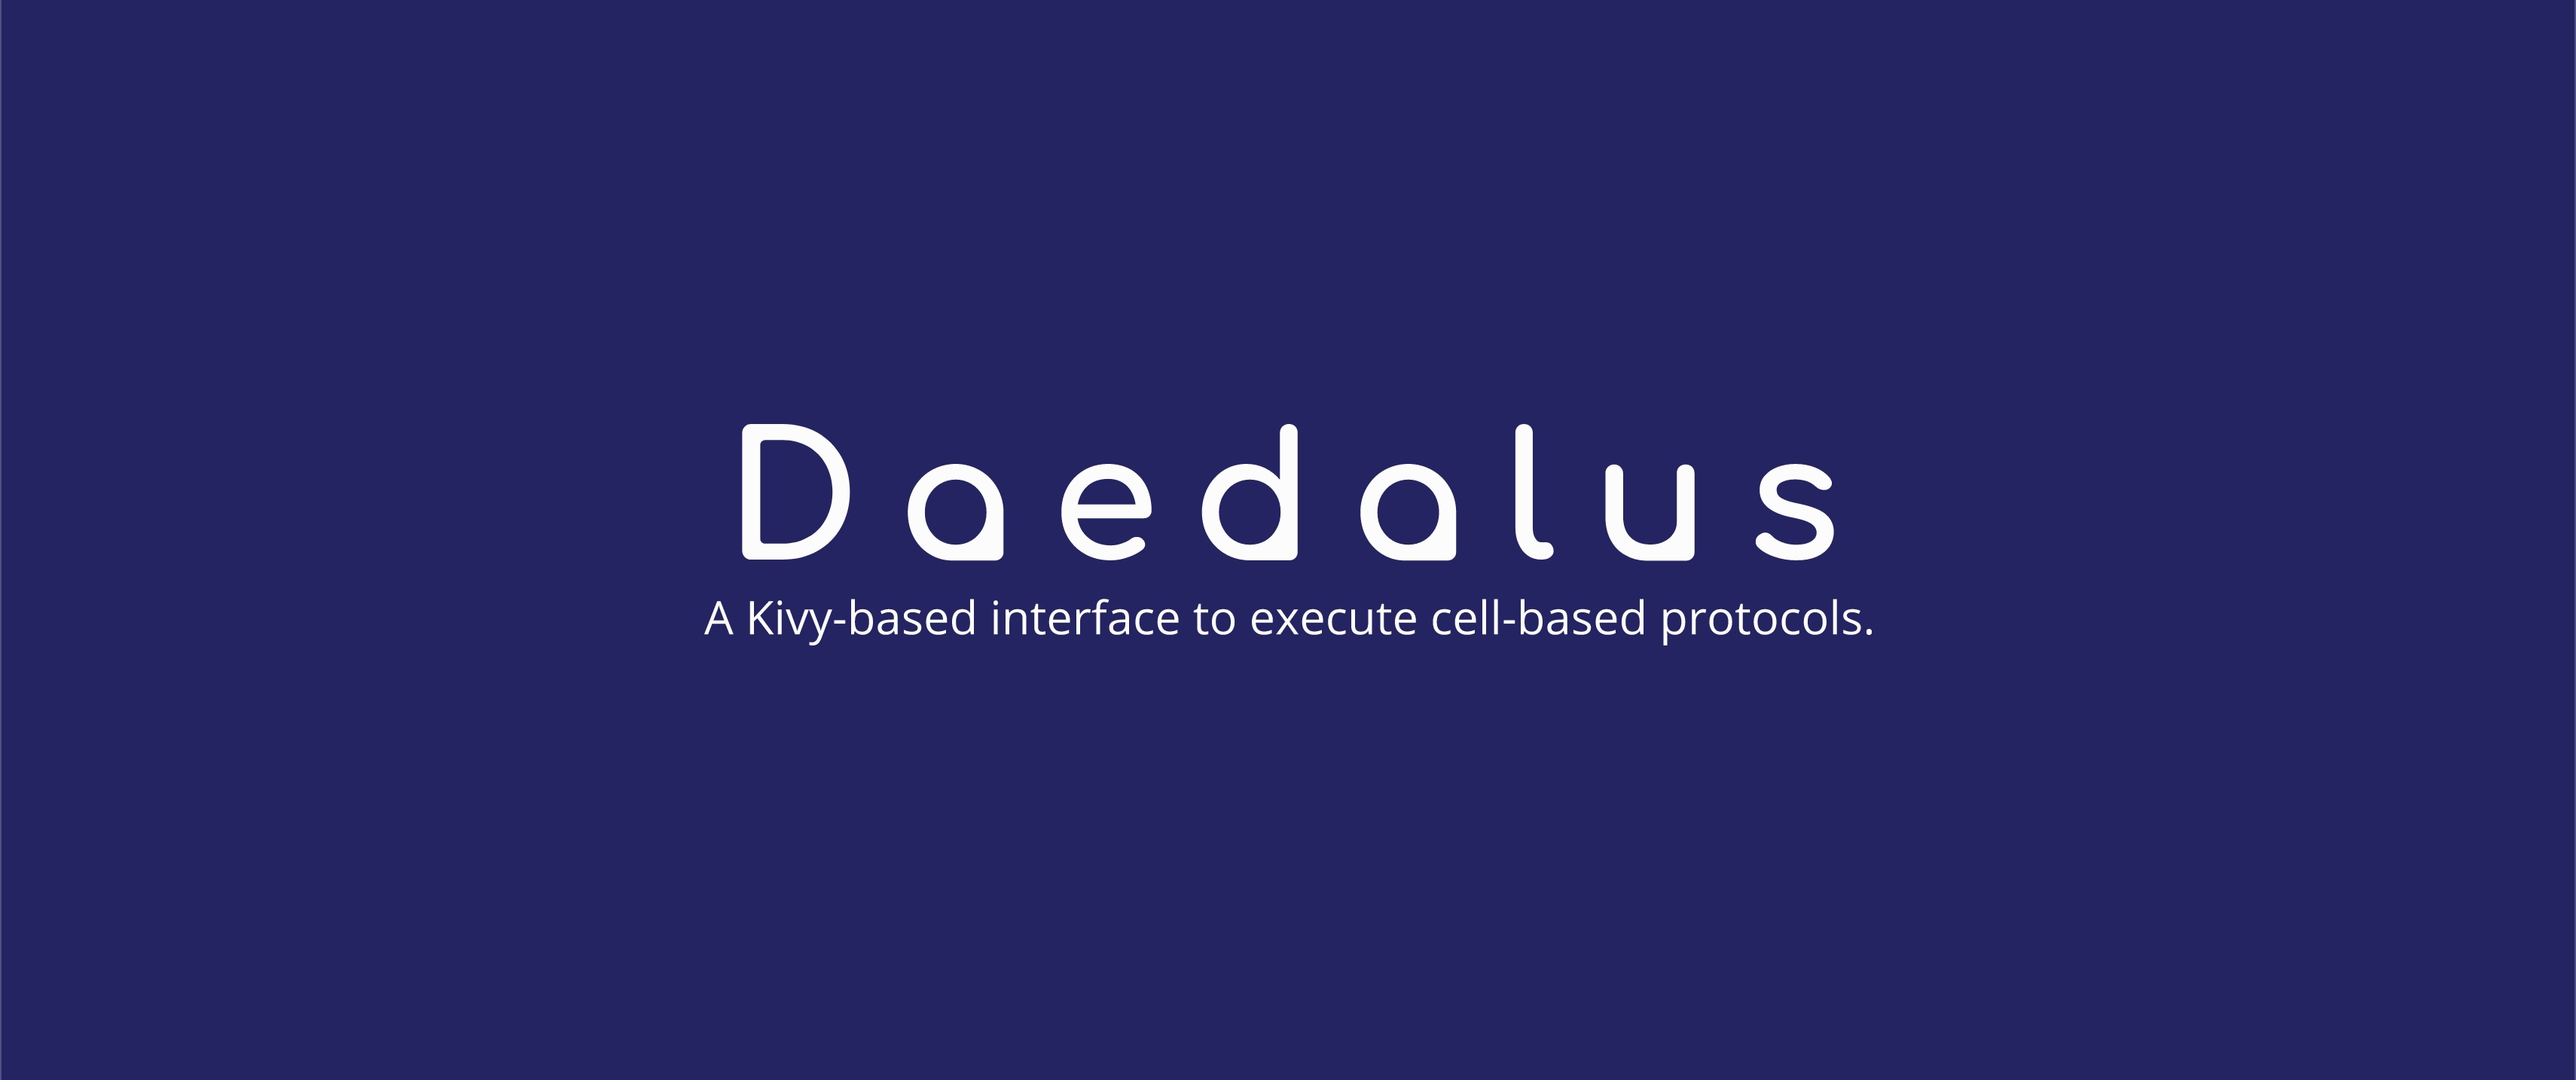 daedalus Banner